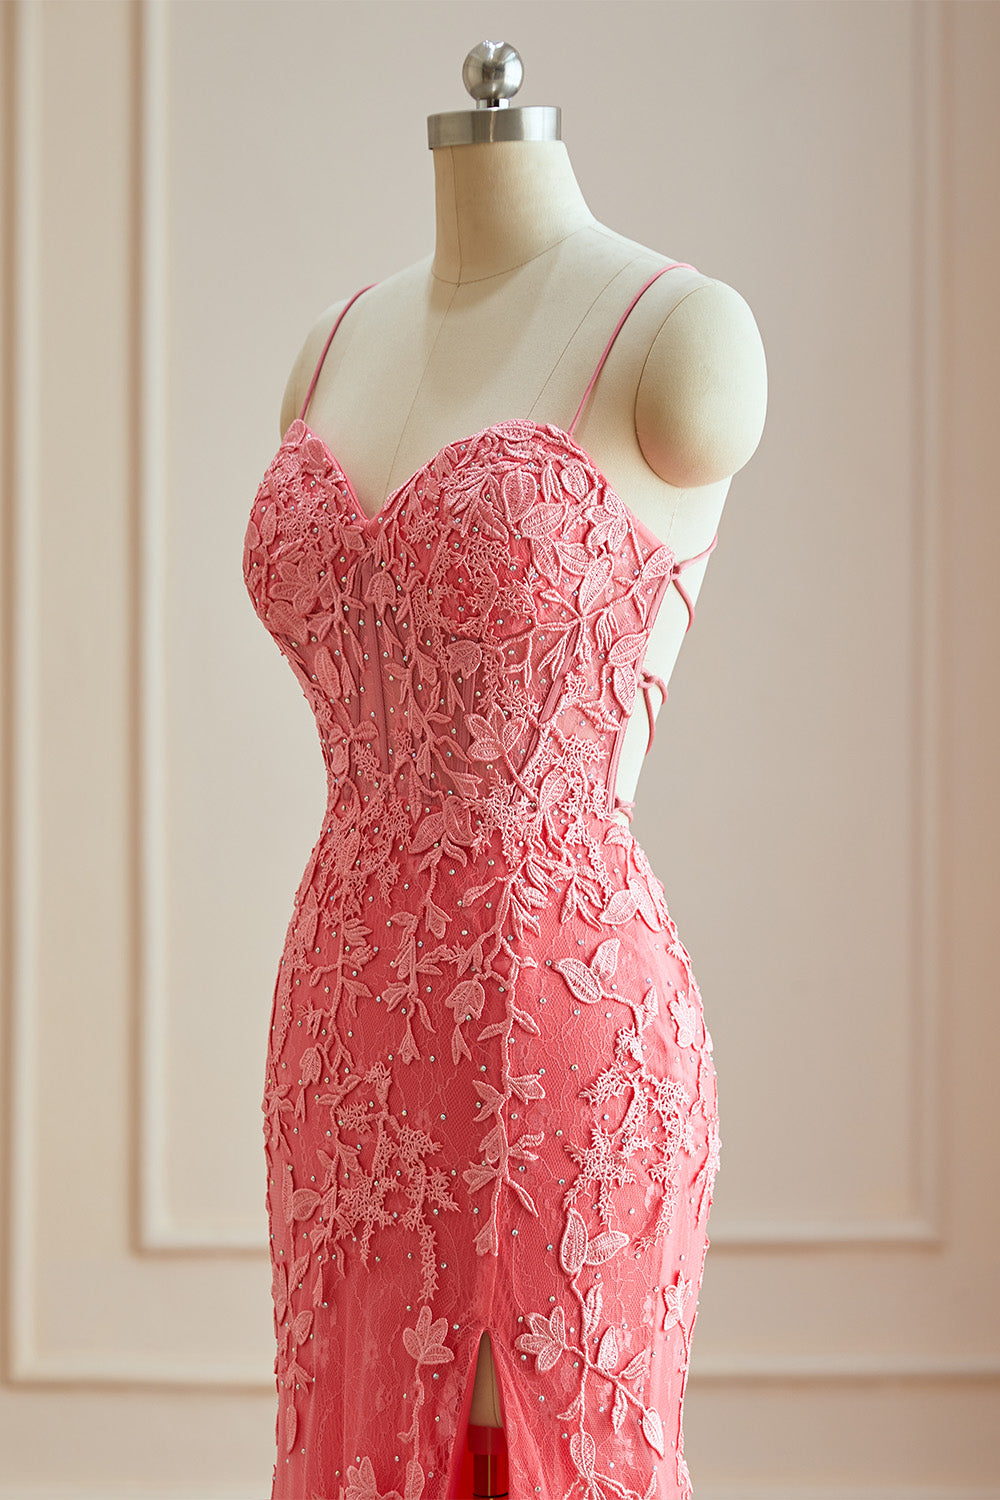 Hebochic Lace Applique With Beading Mermaid Floor Length Slit Women Dress Formal Evening Prom Dress